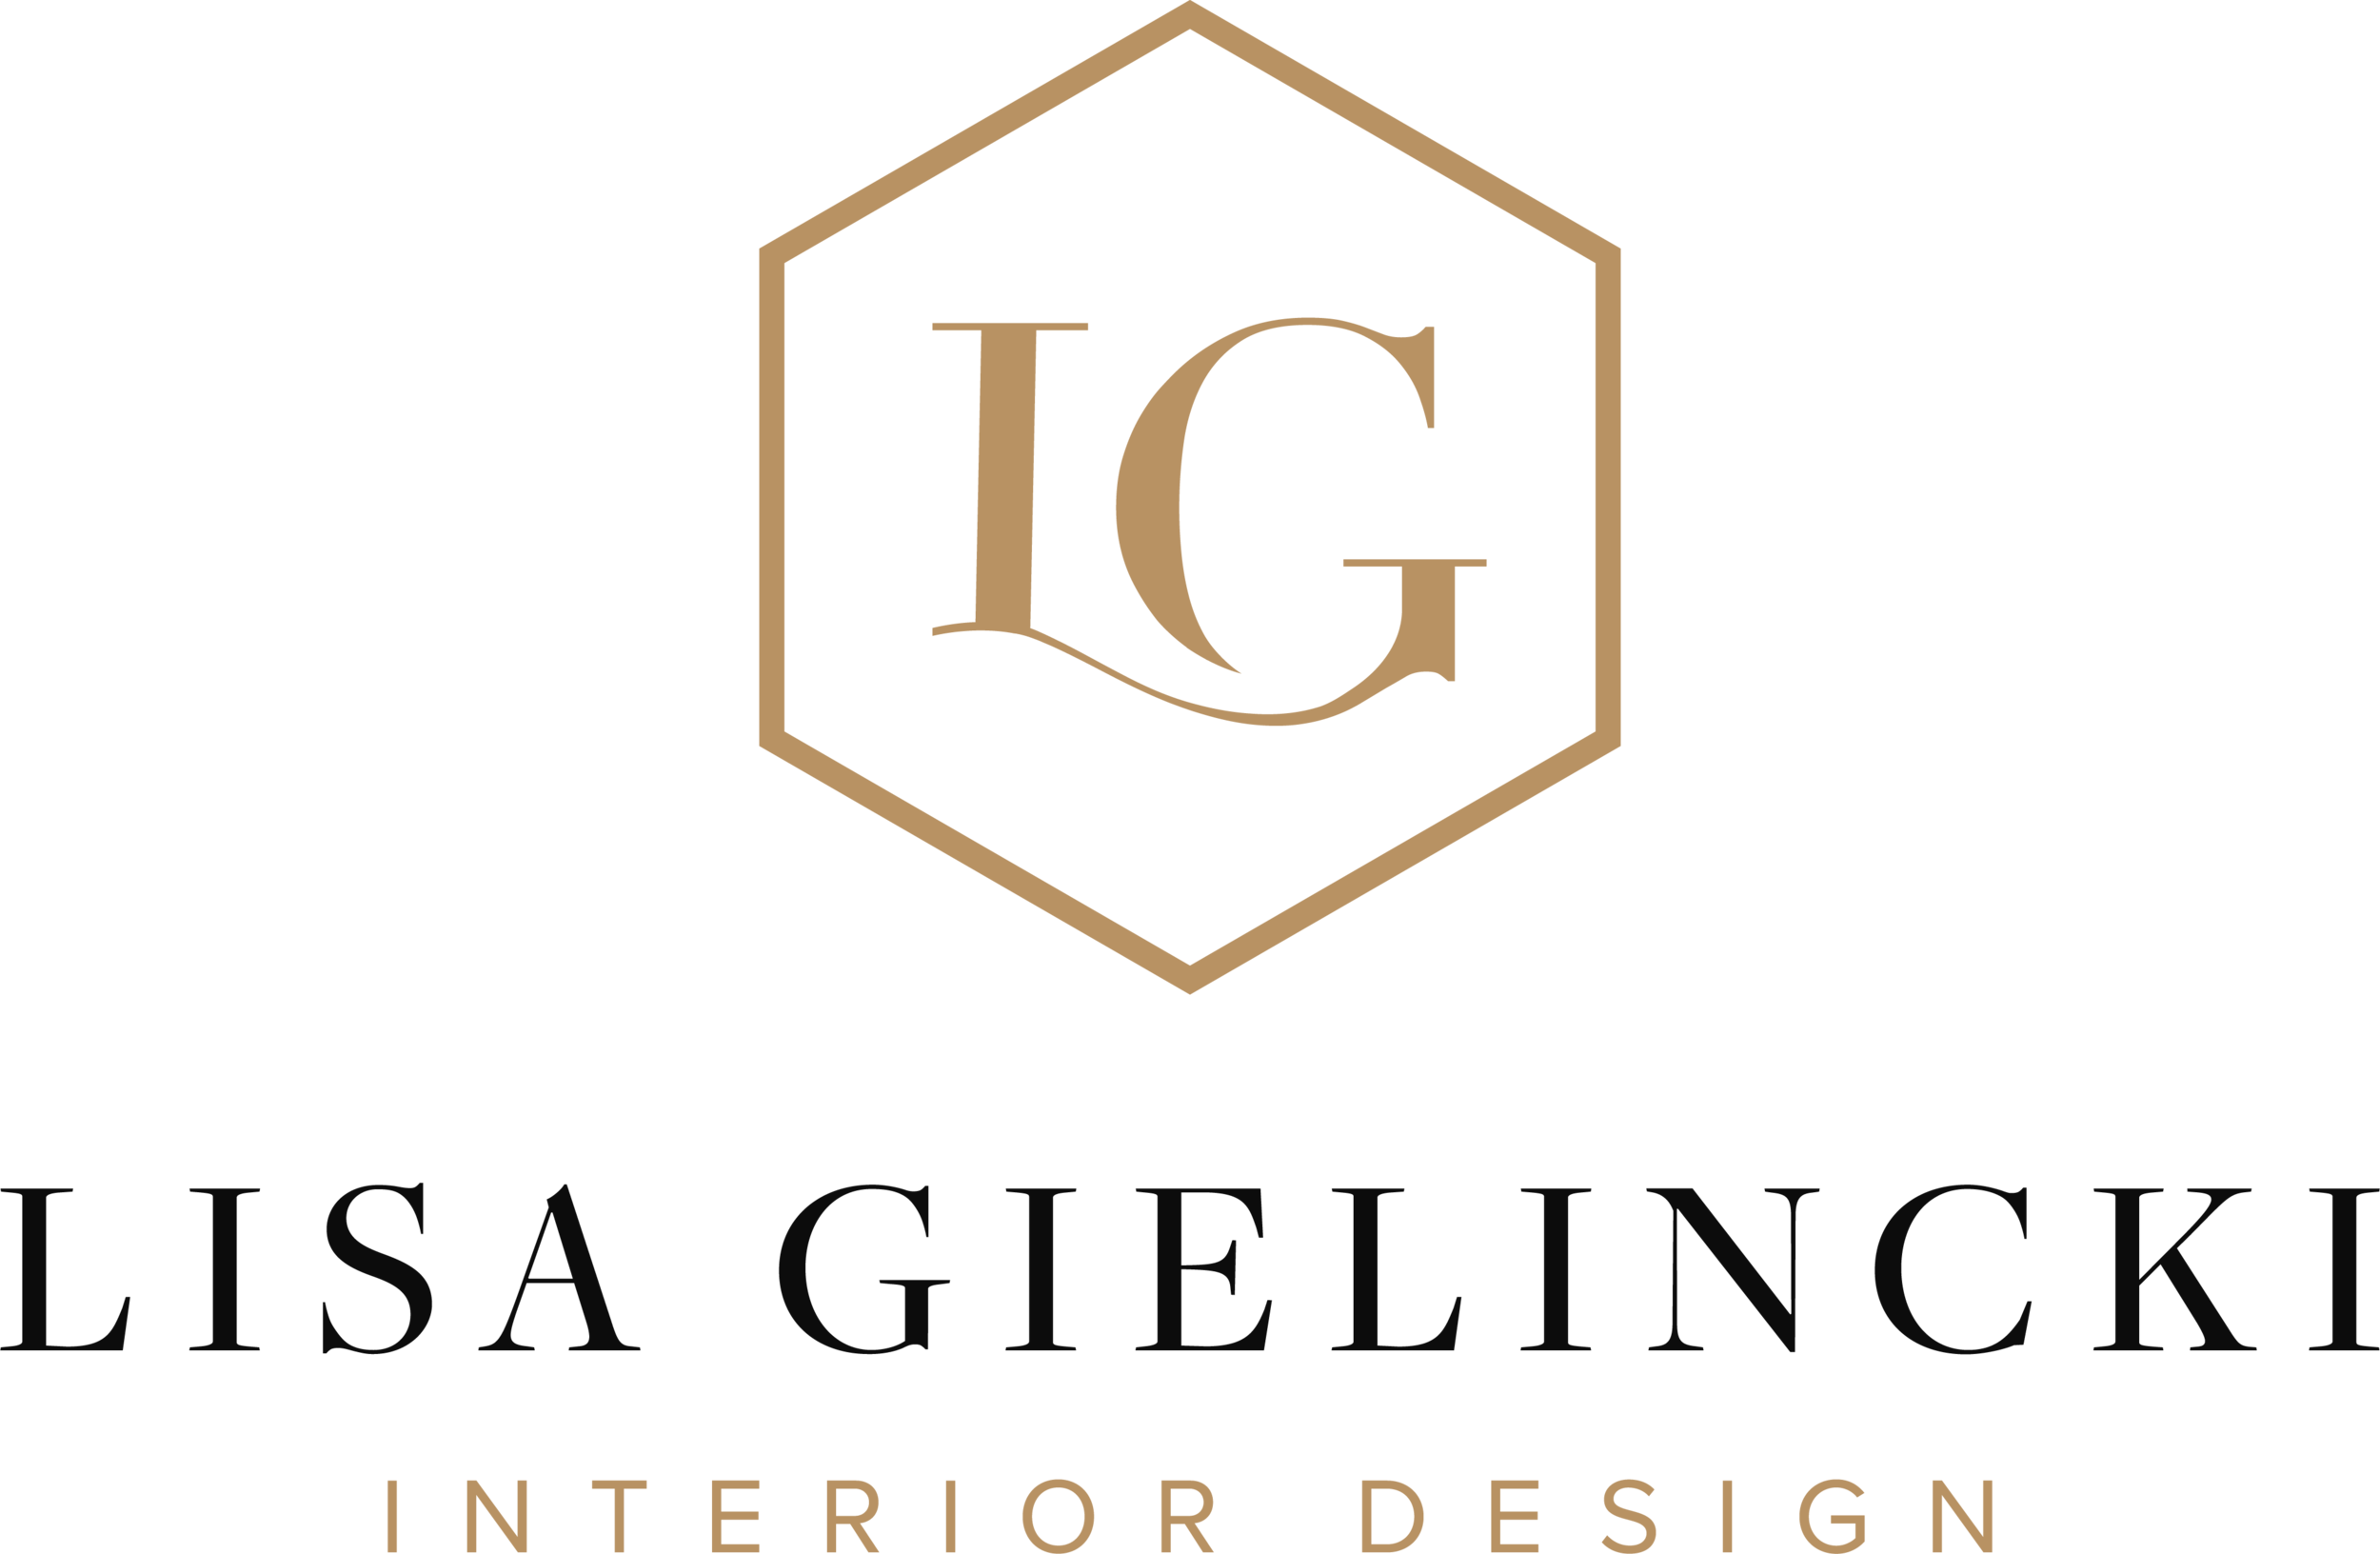 Lisa G Interior Design